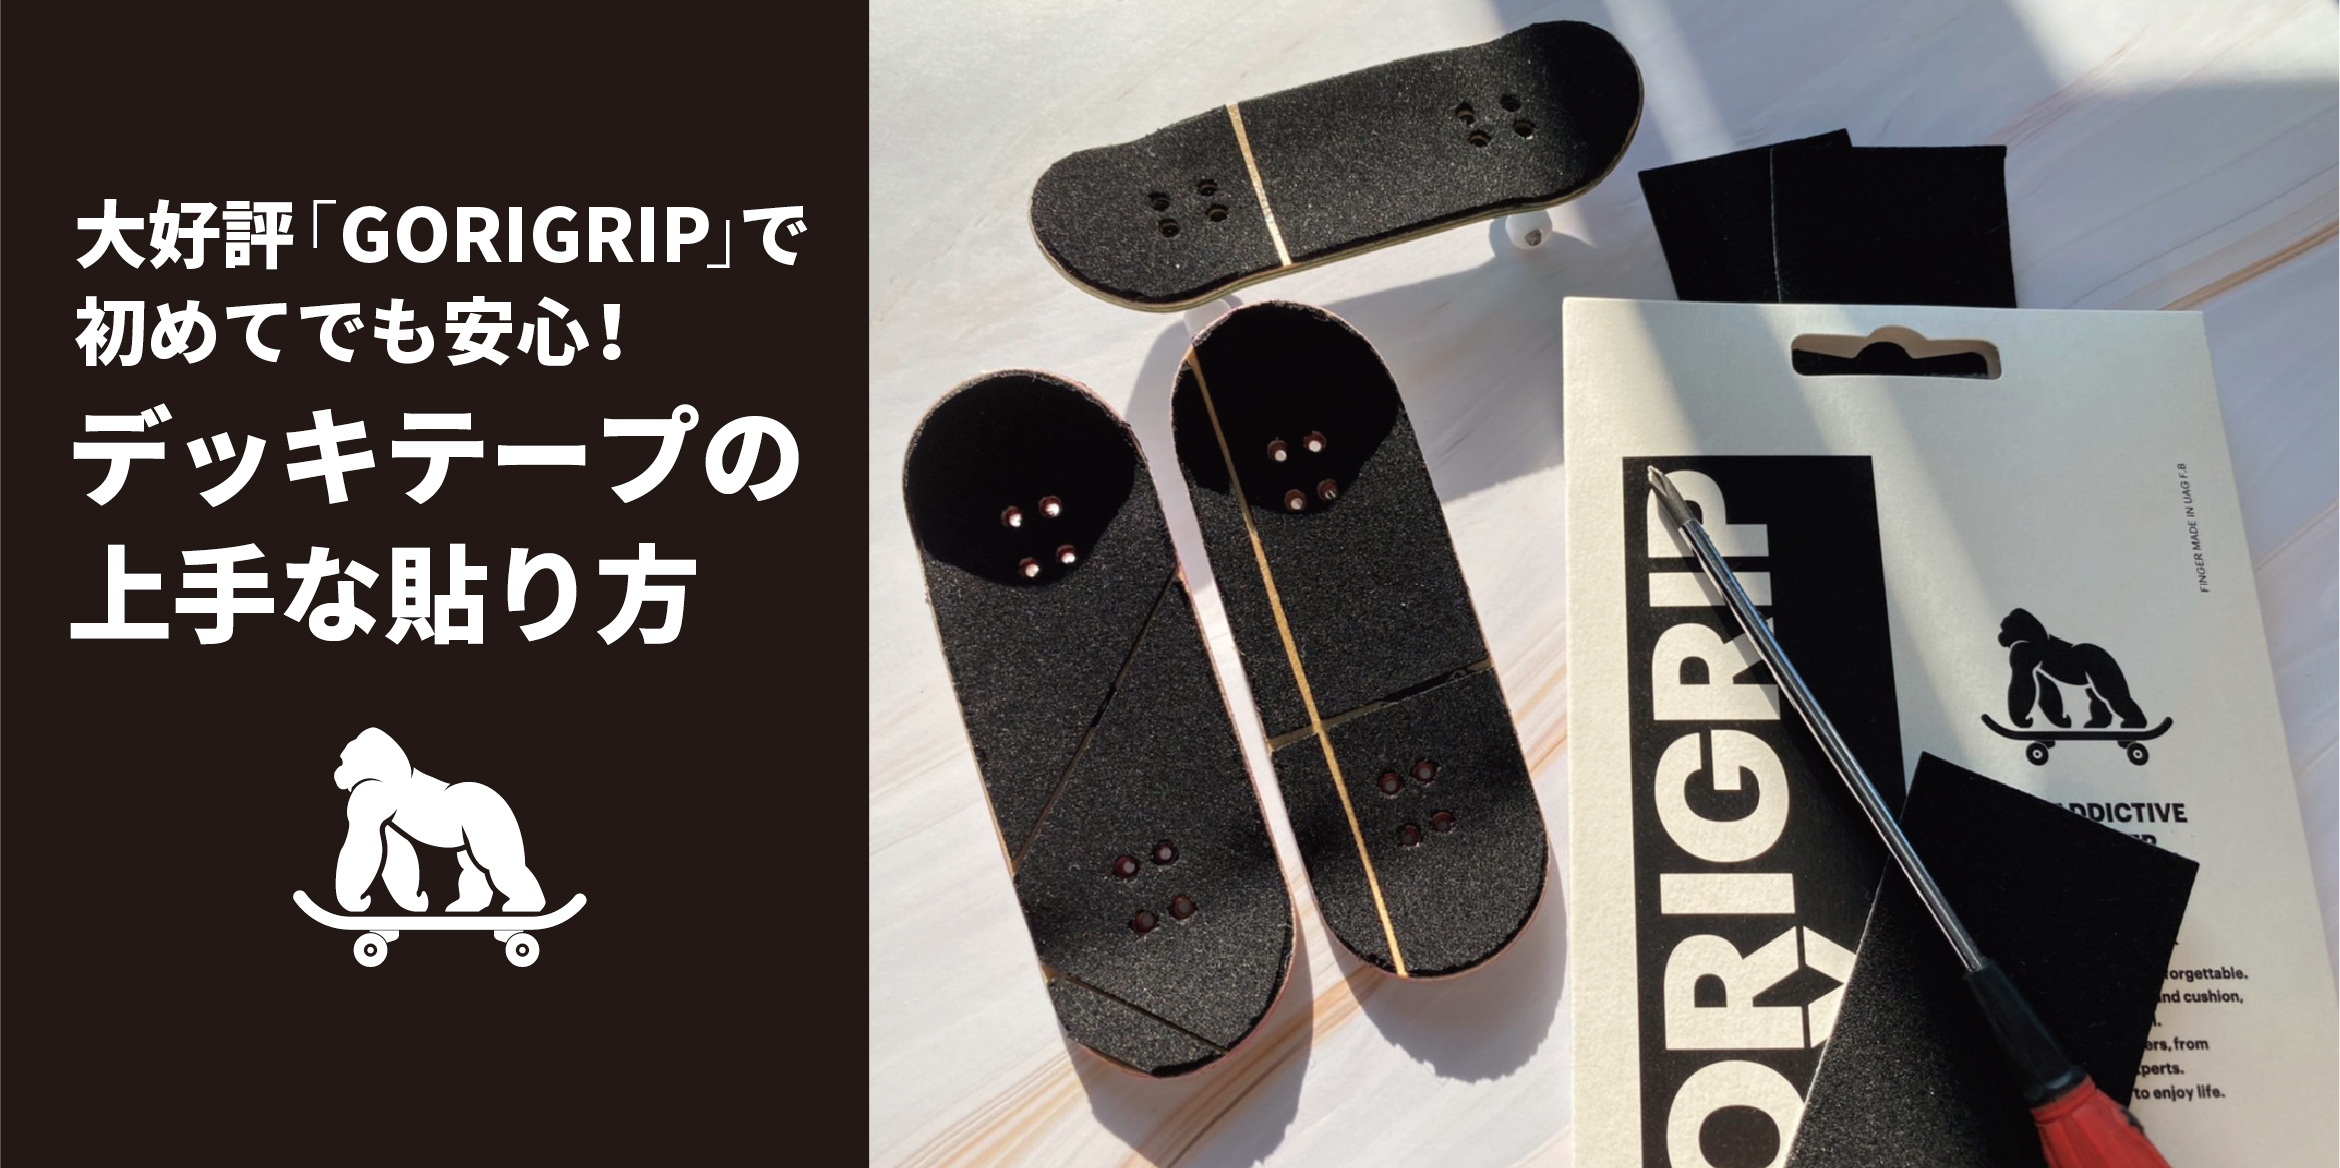 UAG  コンプリート   Simple   ブラック   slim   finger skate board    指スケ   指スケボー